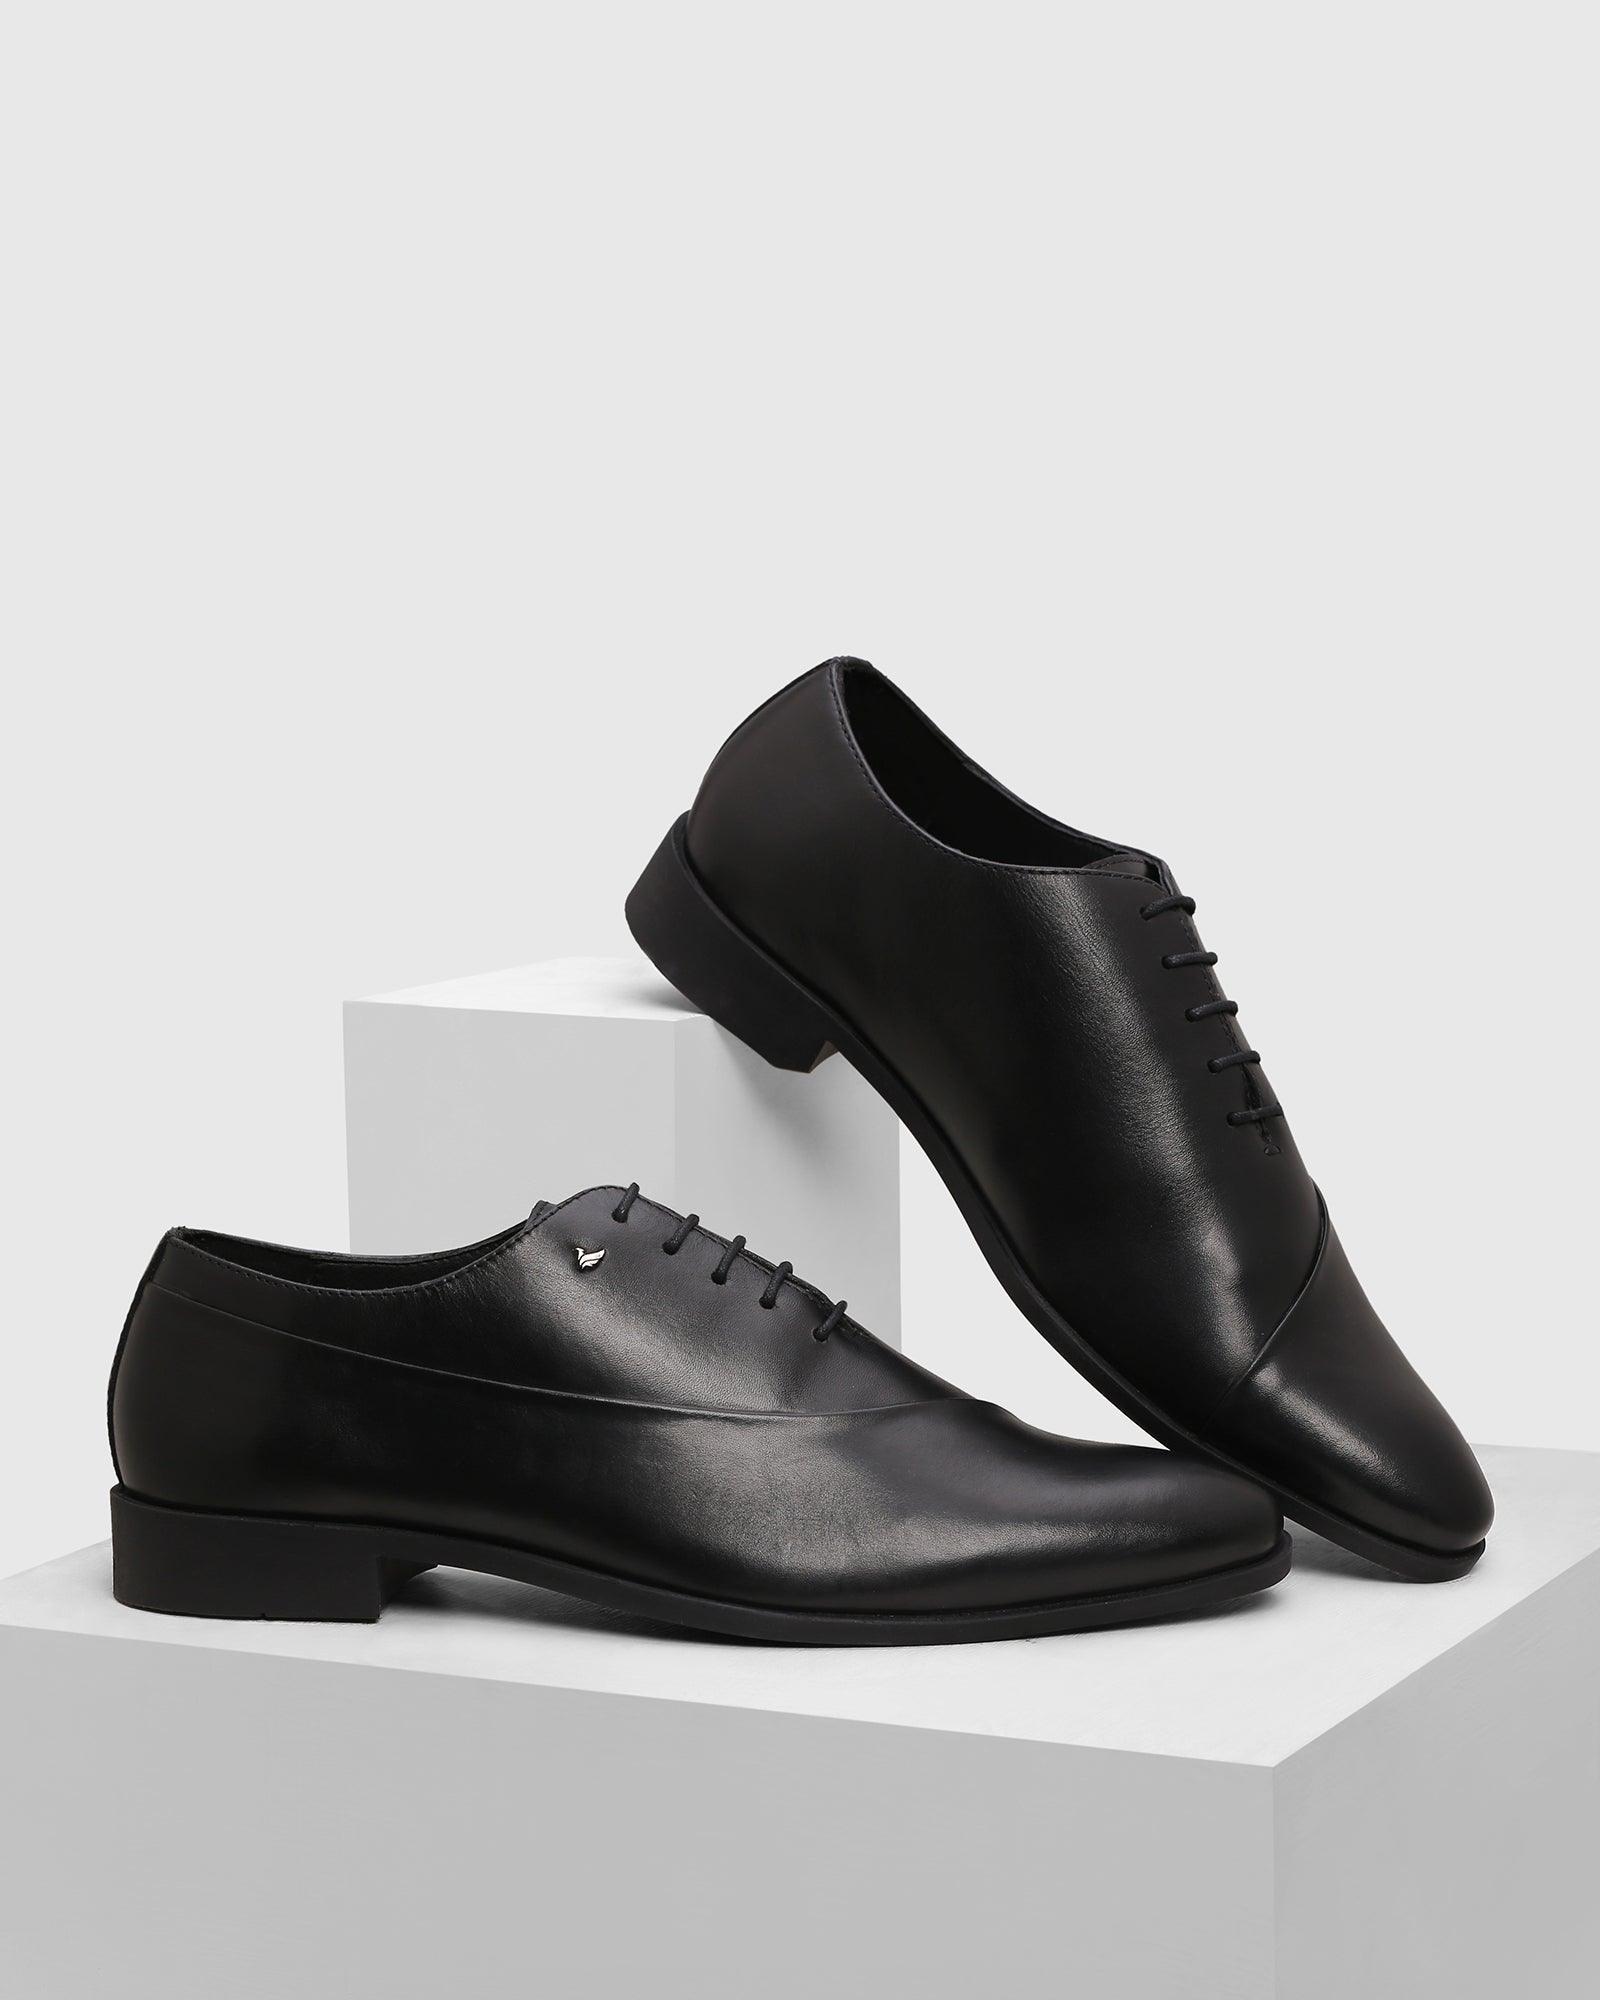 leather-formal-black-solid-oxford-shoes---pren